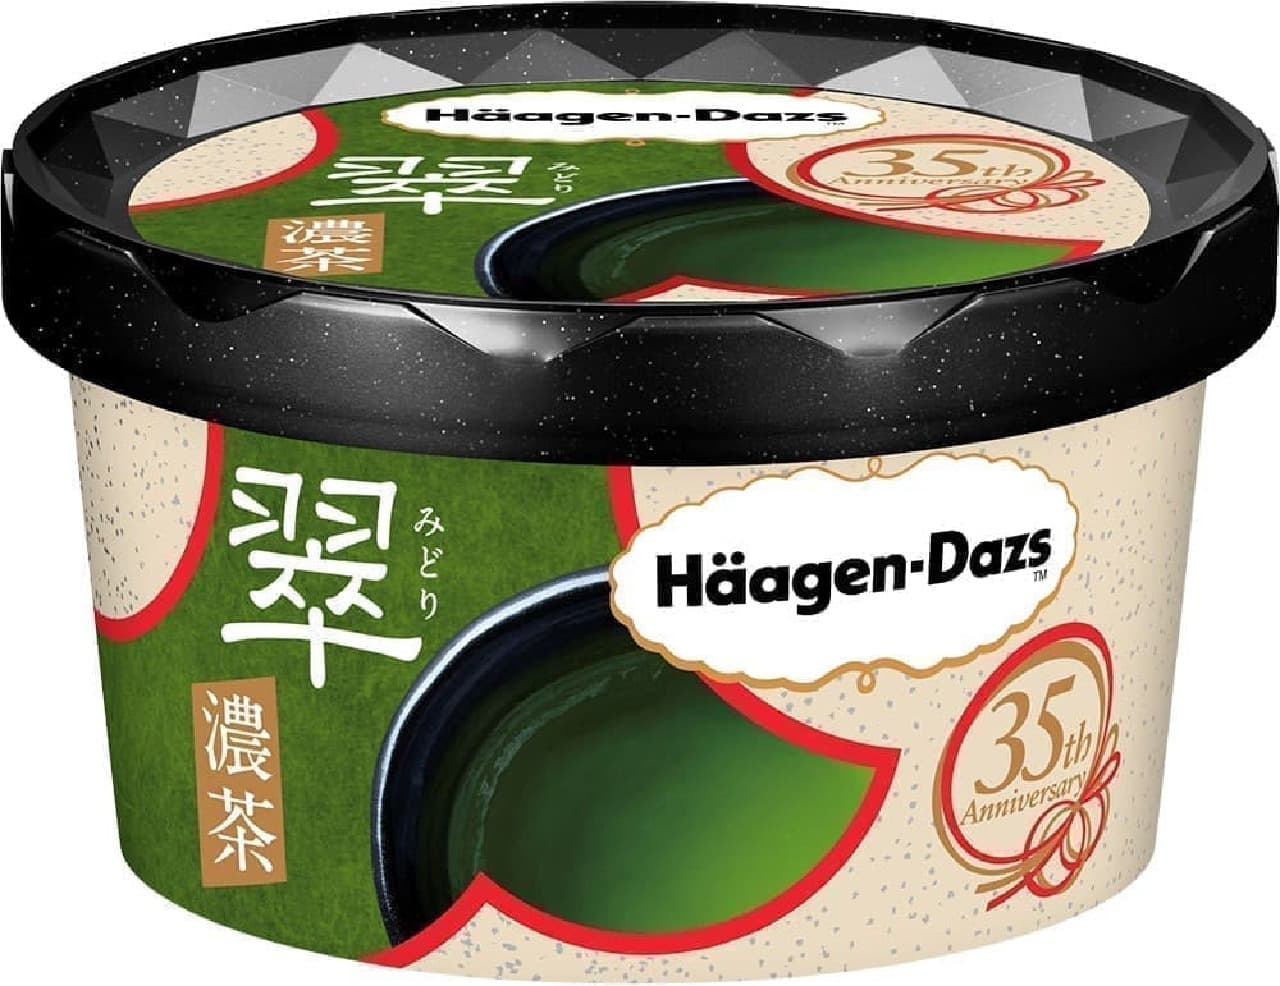 Haagen-Dazs "35th Anniversary Product Midori-Dark Tea-"